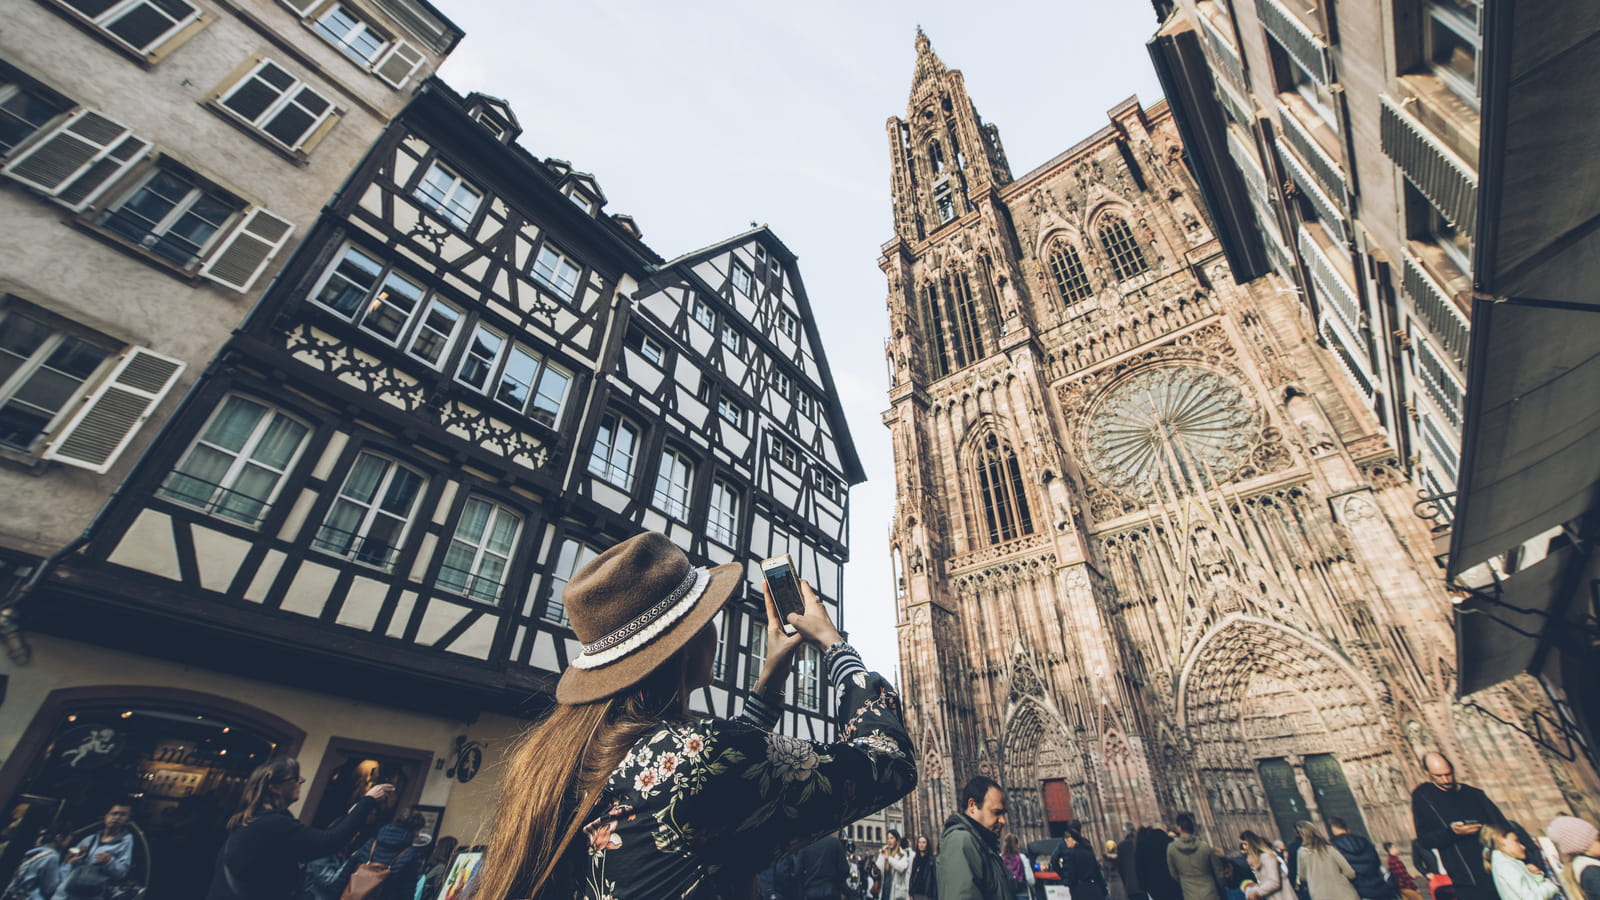 Cathedrale de Strasbourg